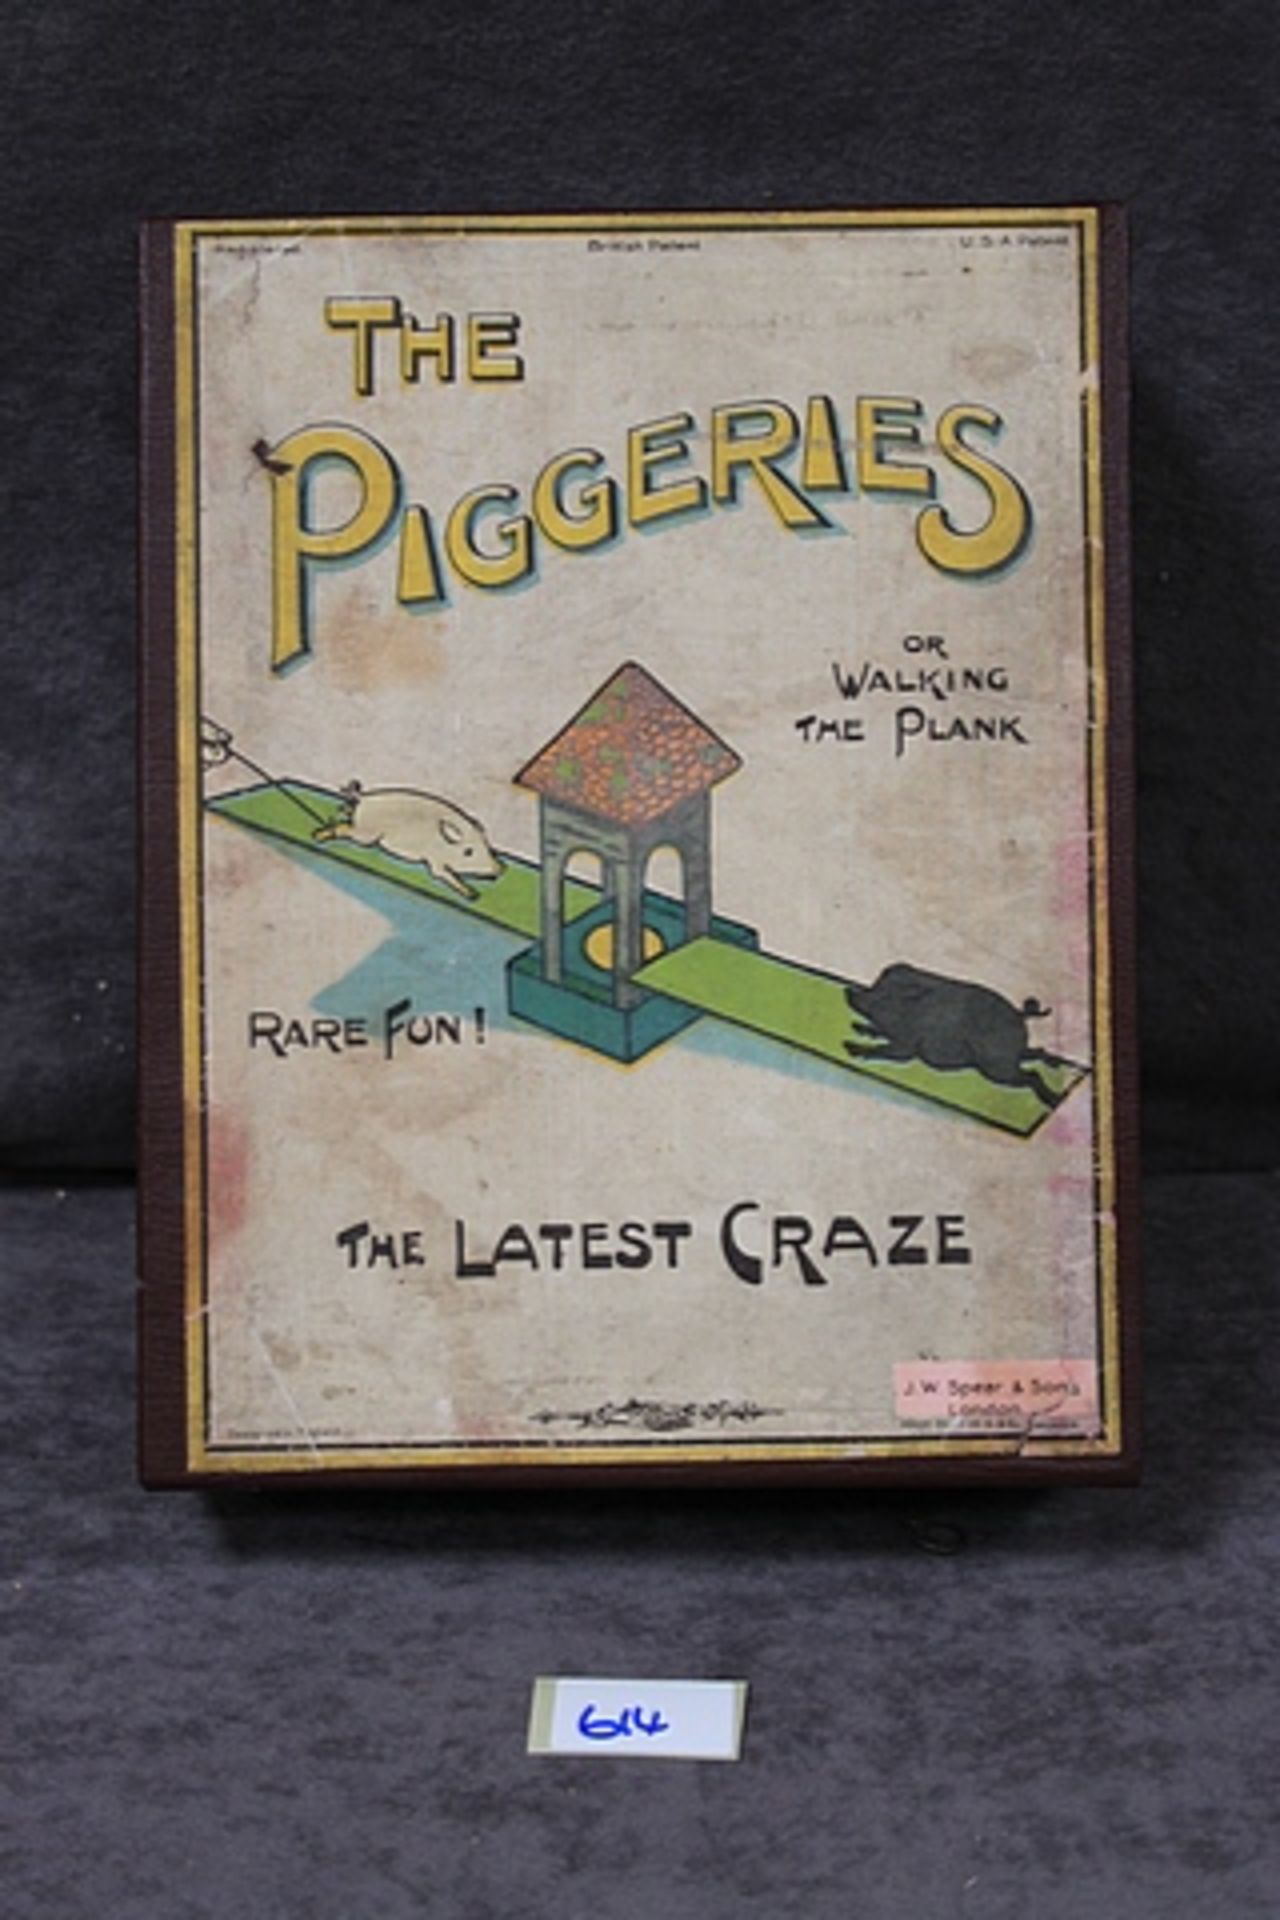 Vintage J W Spear & Sons The Piggeries 1907 Edwardian Wooden Game 'The Piggeries' By J W Spear & - Image 2 of 2